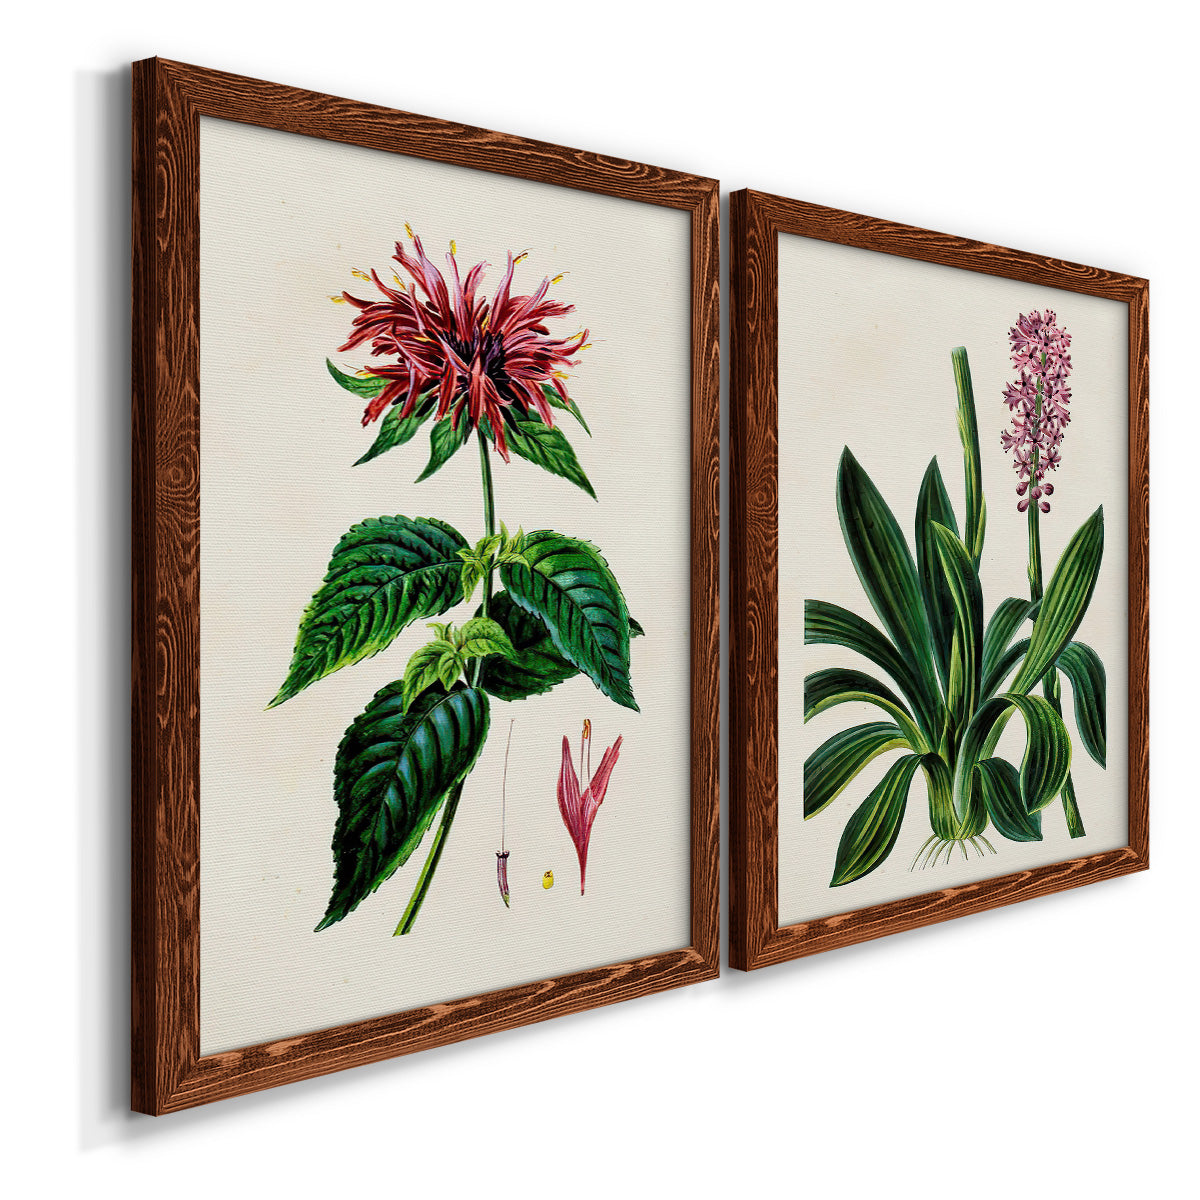 Antique Floral Folio I - Premium Framed Canvas 2 Piece Set - Ready to Hang